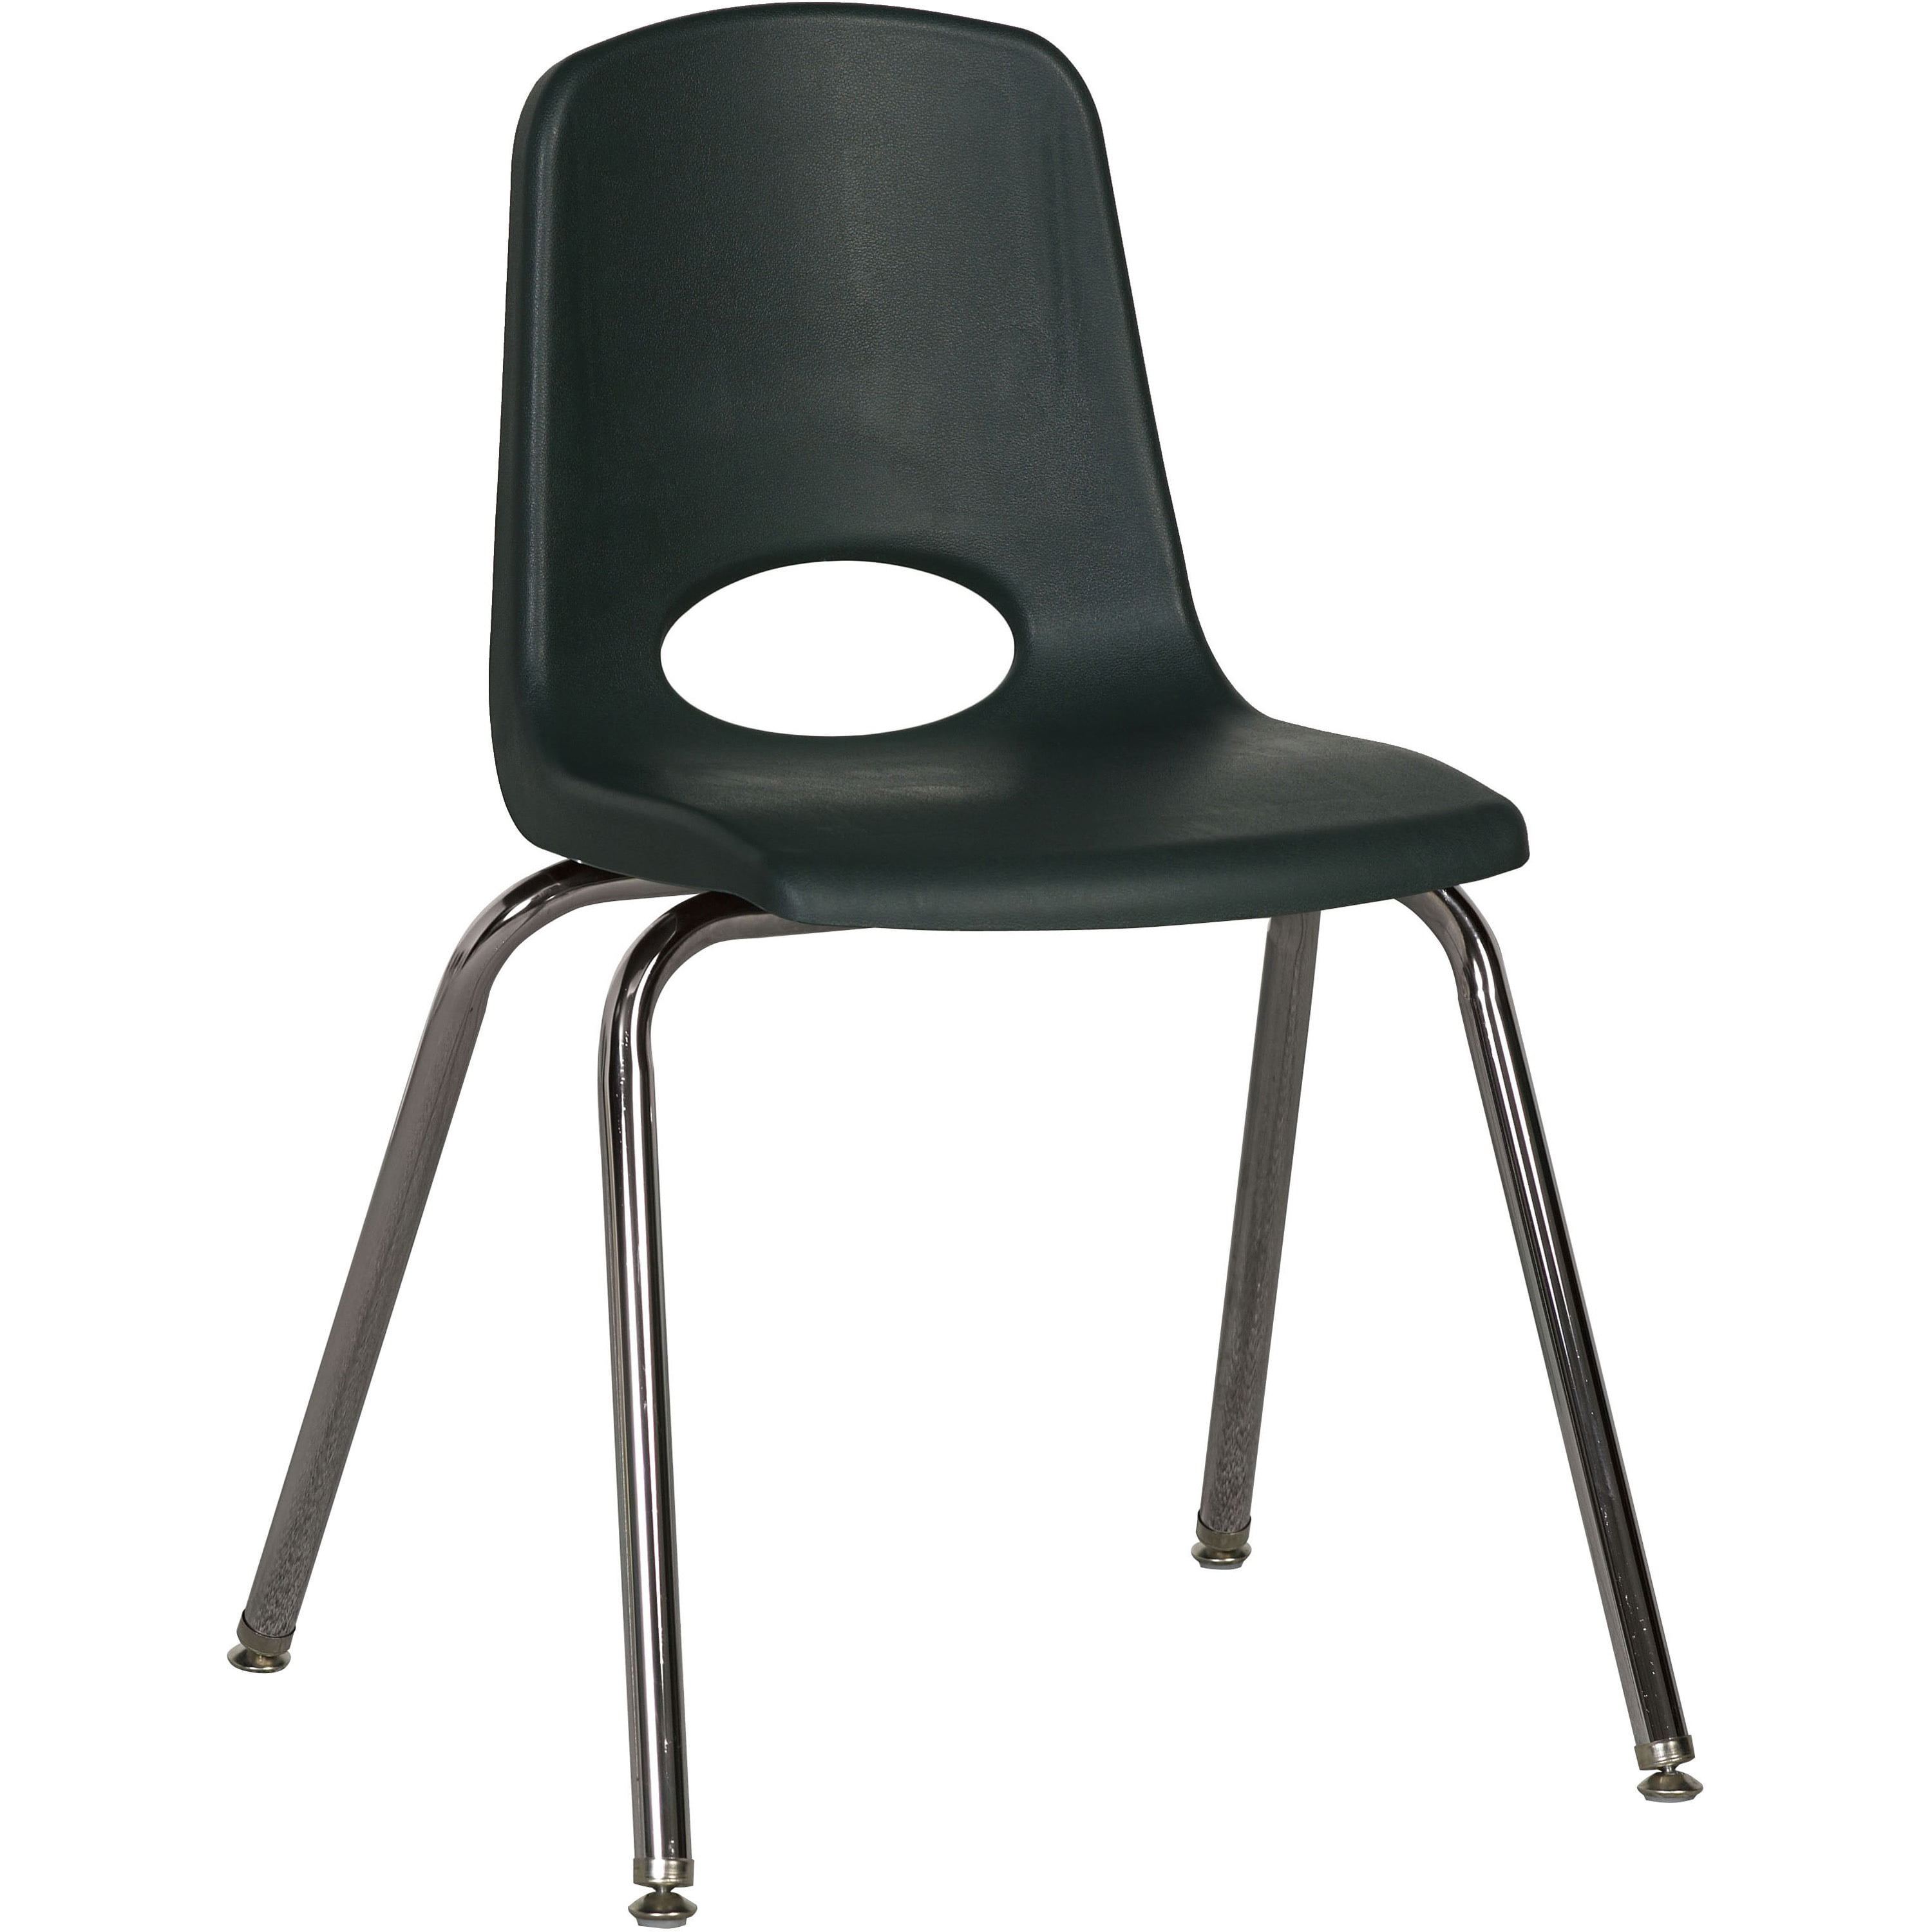 Blue Chrome Legs with Nylon Swivel Glides ECR4Kids 10 School Stack Chair 6-Pack 